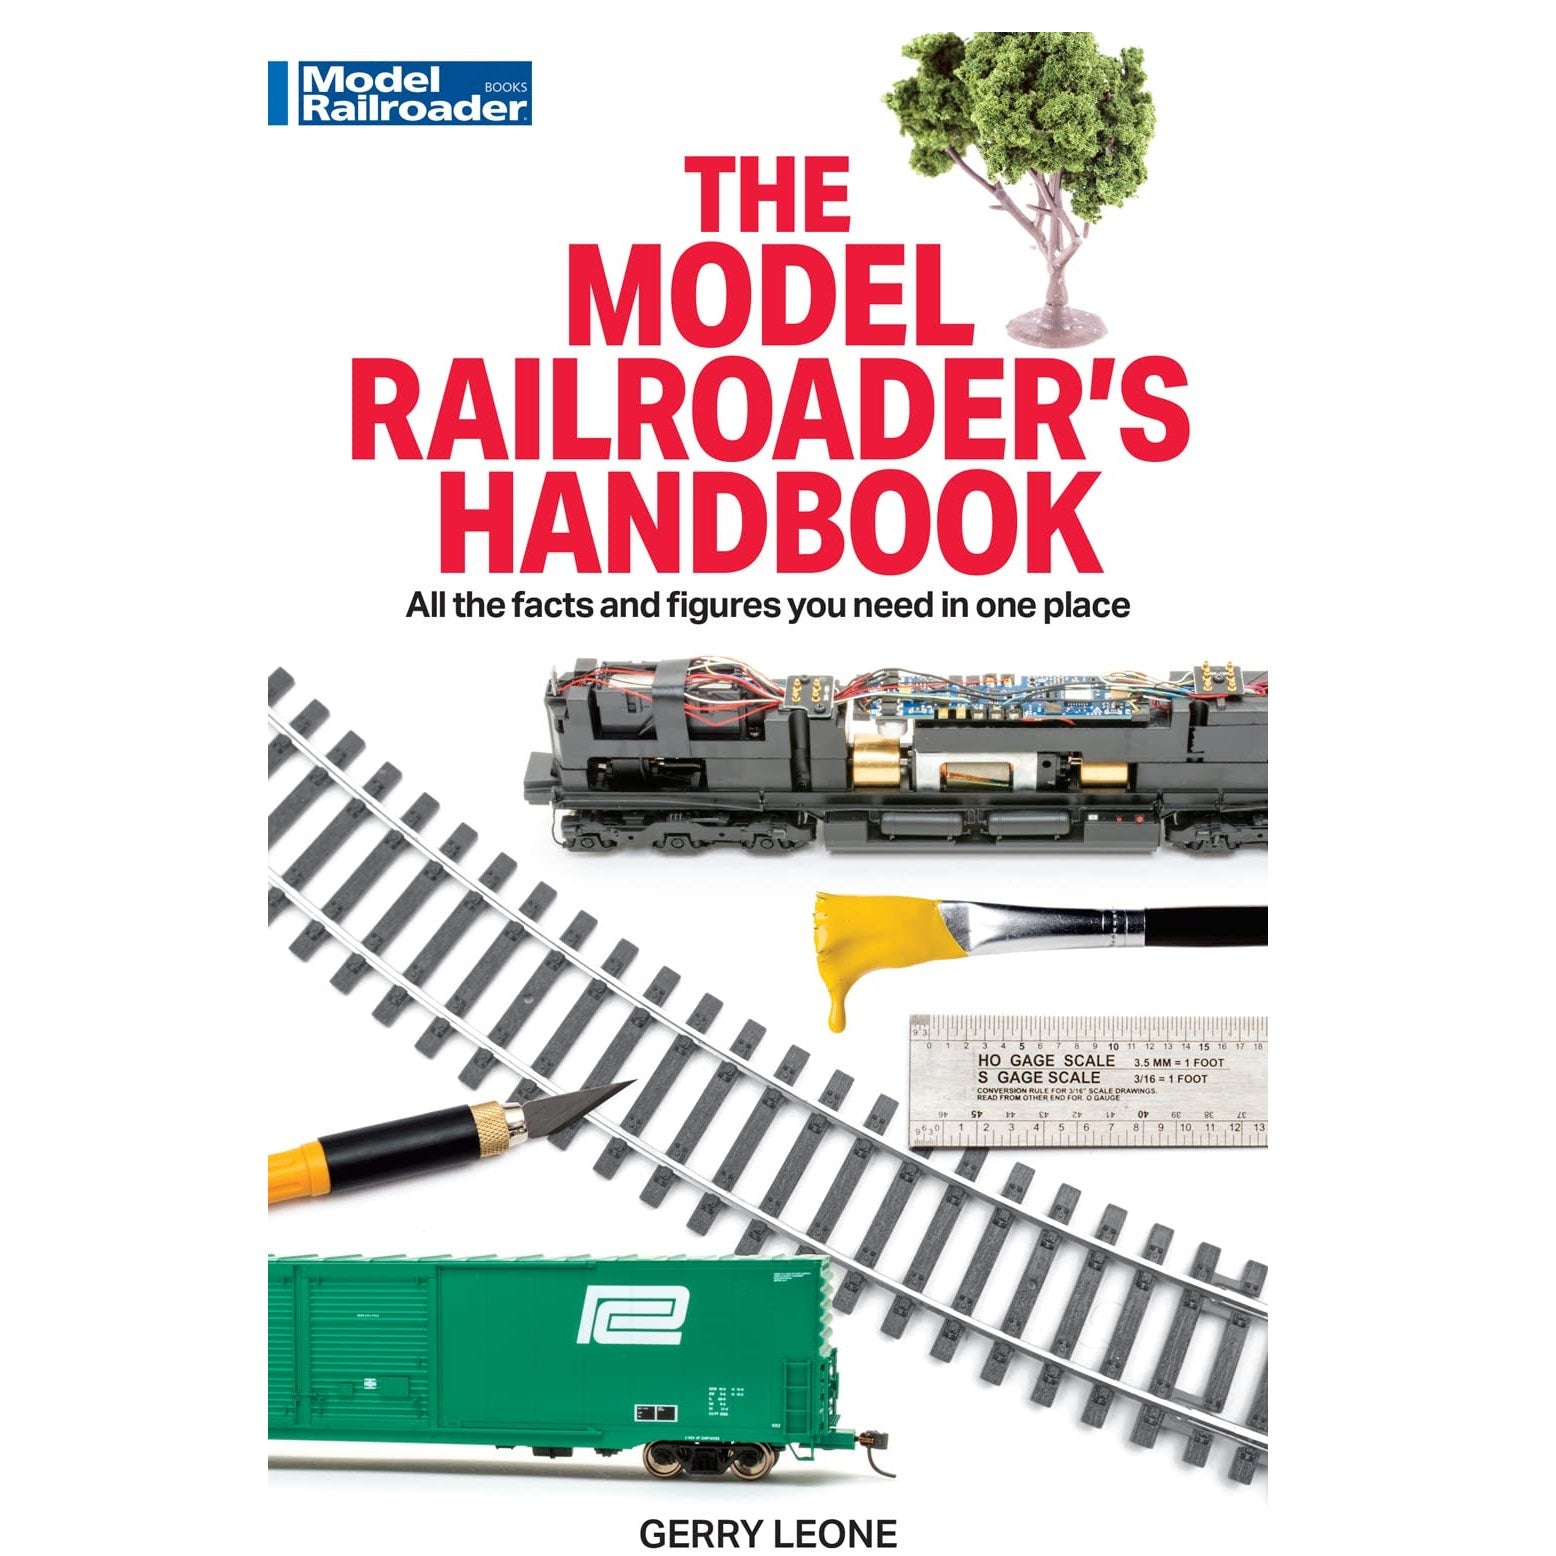 Model Railroaders Handbook by Gerry Leone